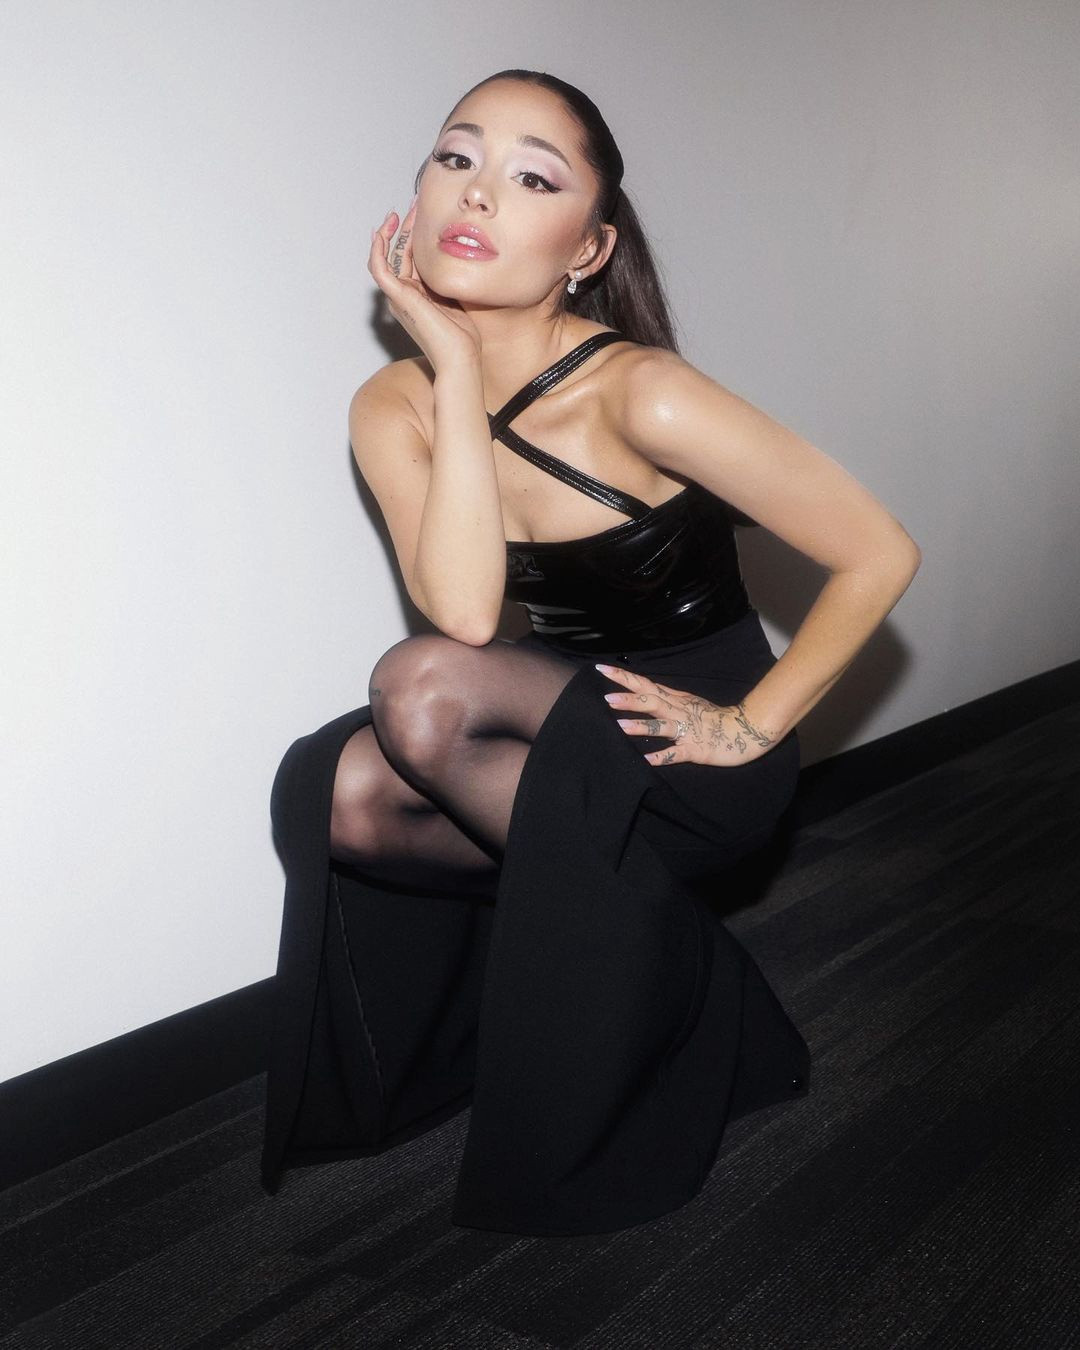 Ариана Гранде (Ariana Grande)